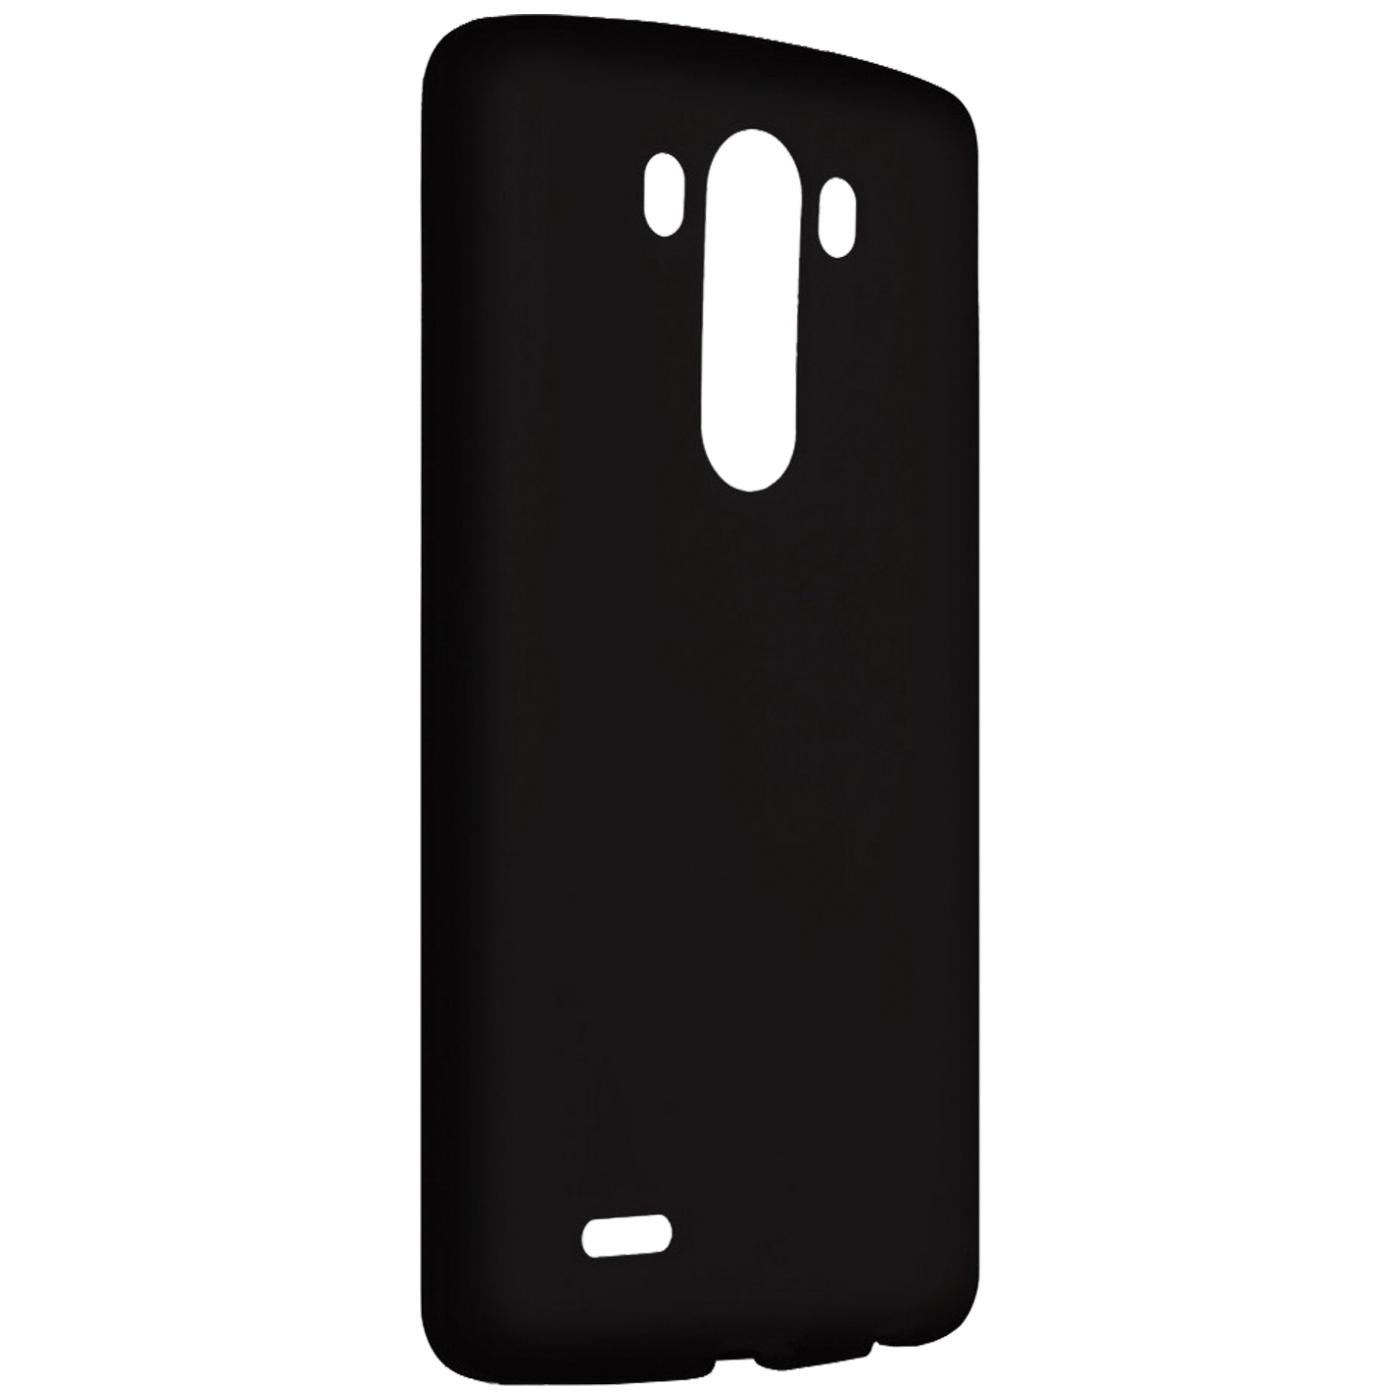 Futrola za mobitel LG G3 silikonska, crna